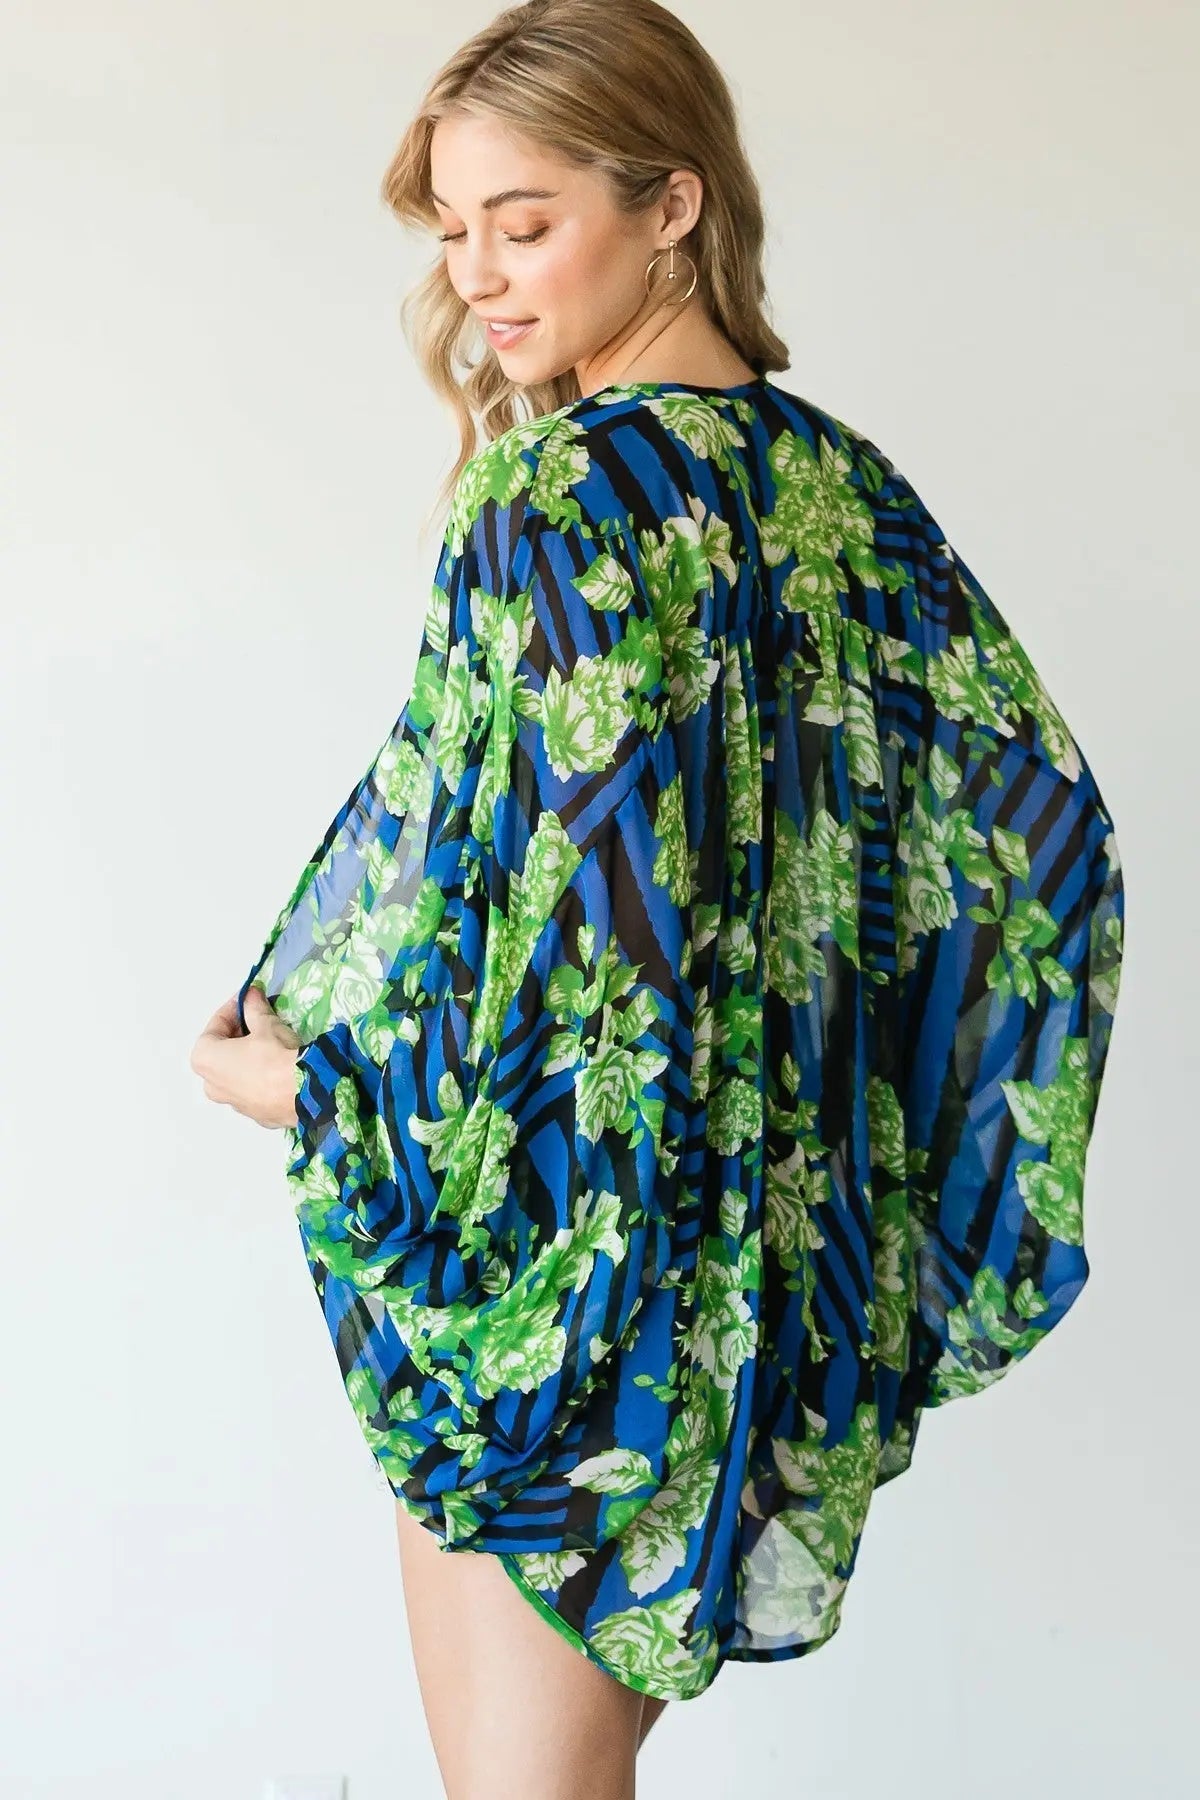 Stripes And Floral Print Lightweight Kimono Sunny EvE Fashion